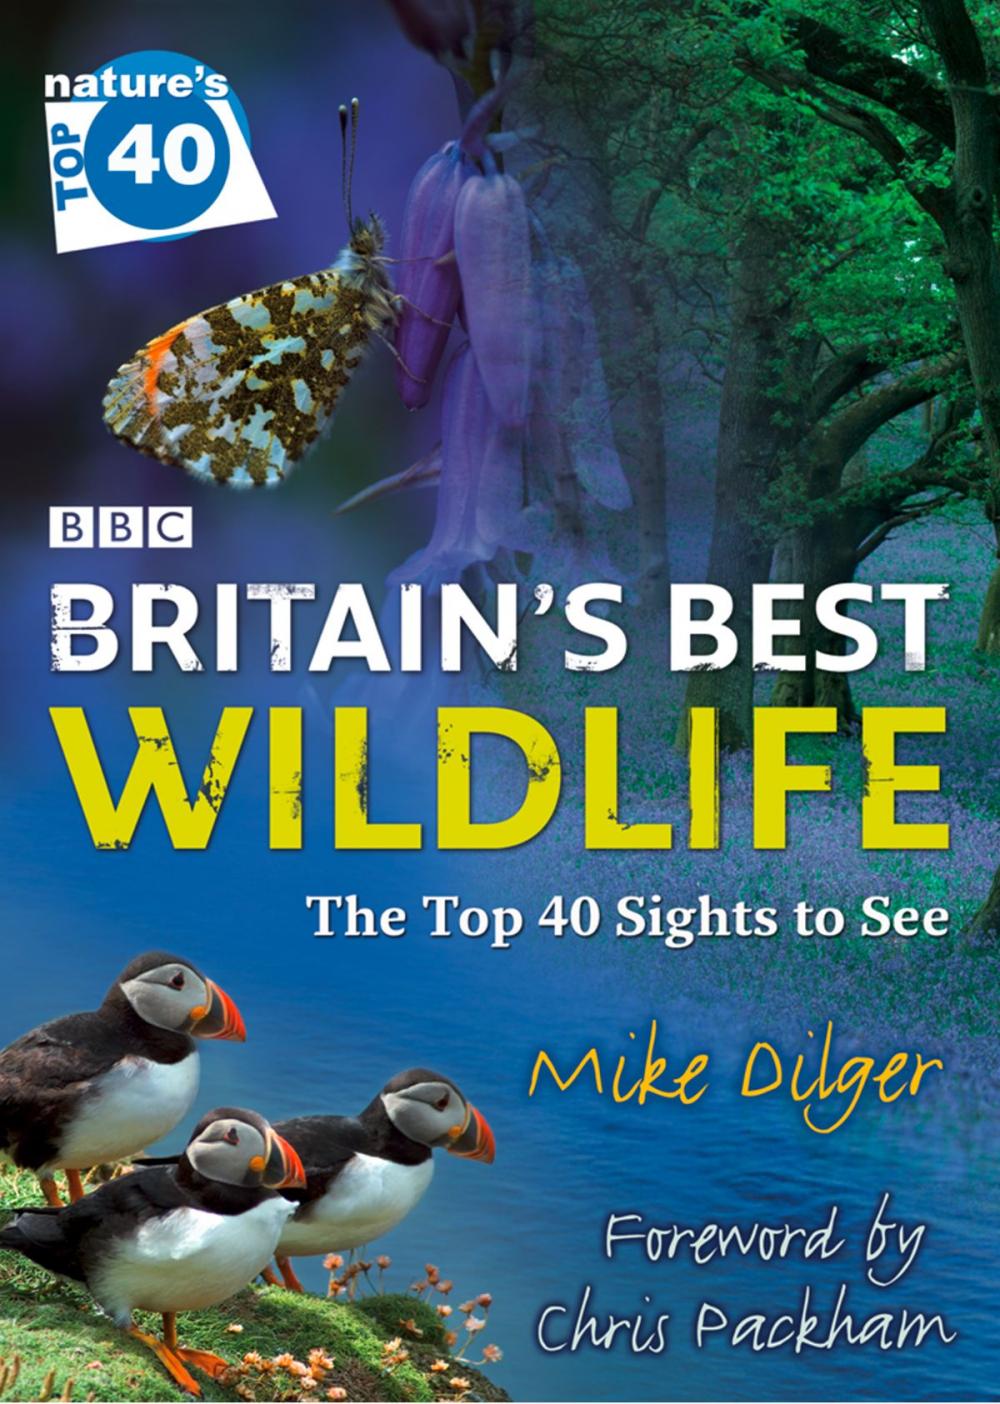 Big bigCover of Nature’s Top 40: Britain’s Best Wildlife